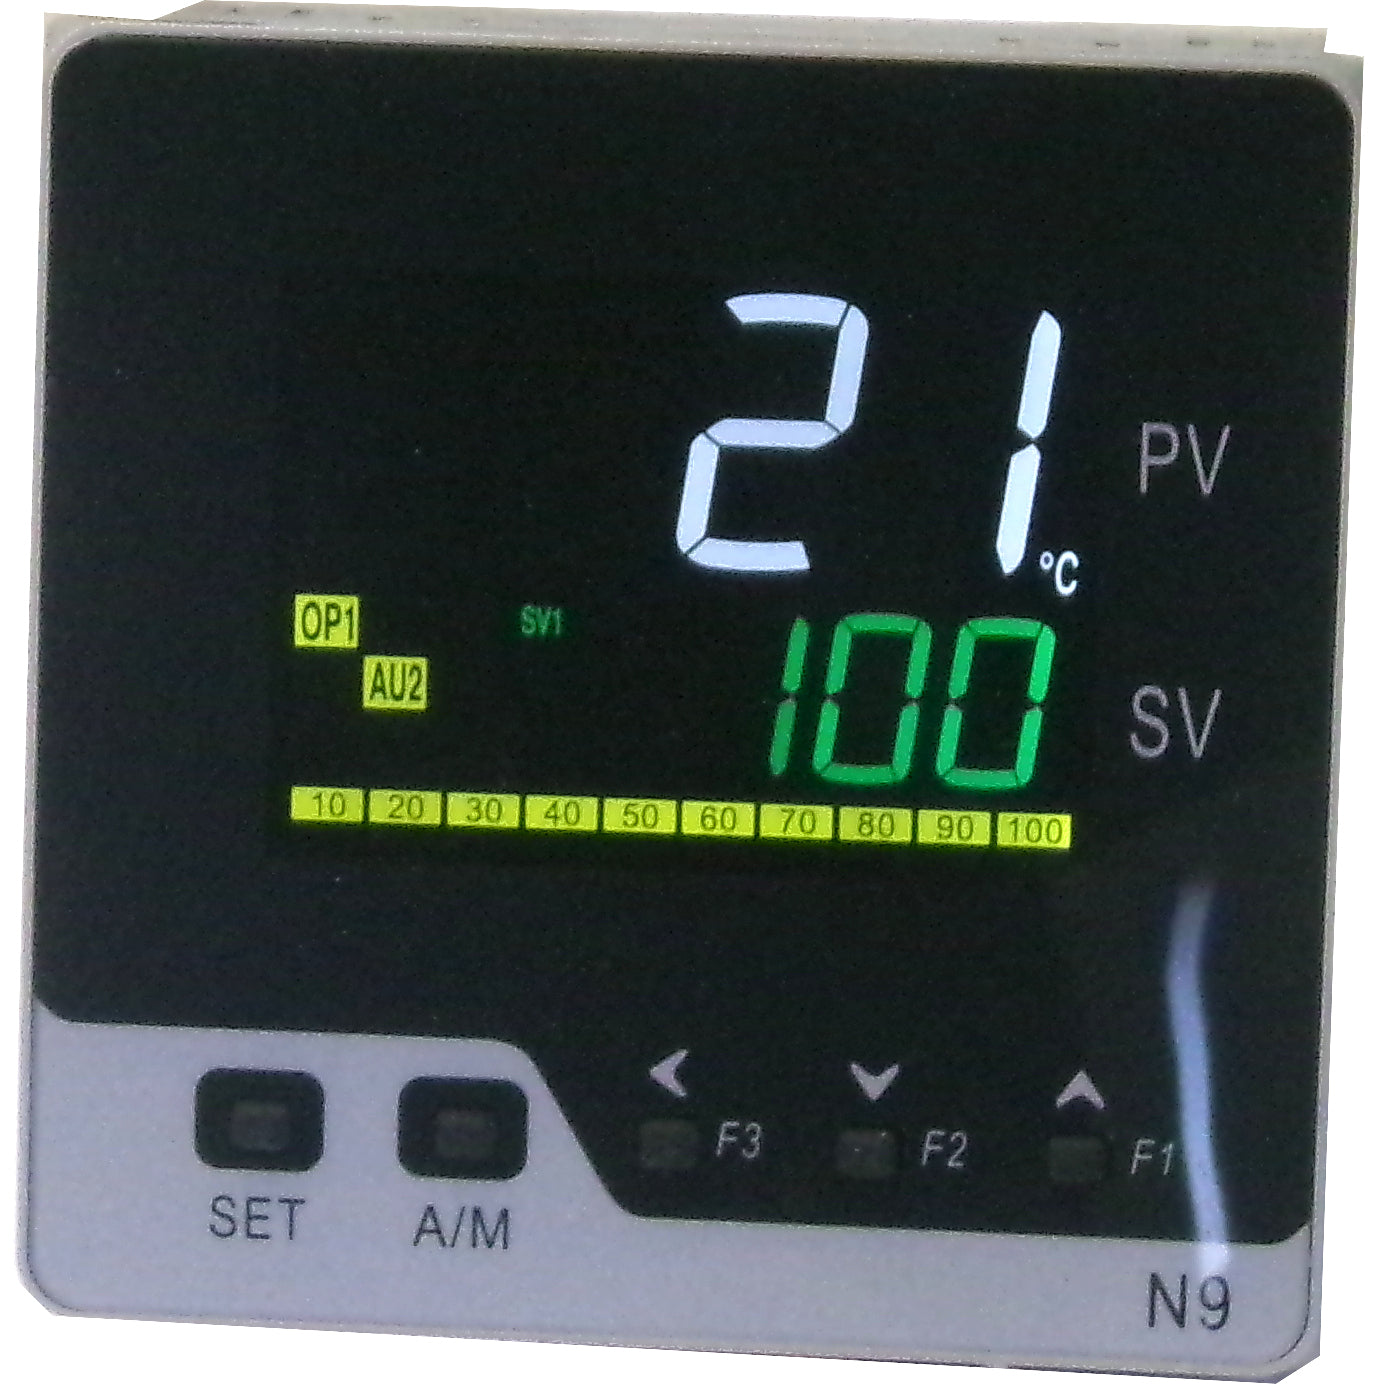 TX4L-U-R-D-2-96-F-N-N-N-N-N, Temp Controller, 96x96mm, 100-240VAC, Mutirange Input, Relay Output, 4-20mA Cooling, 2 Alarms, PV/SV Retransmisison Output